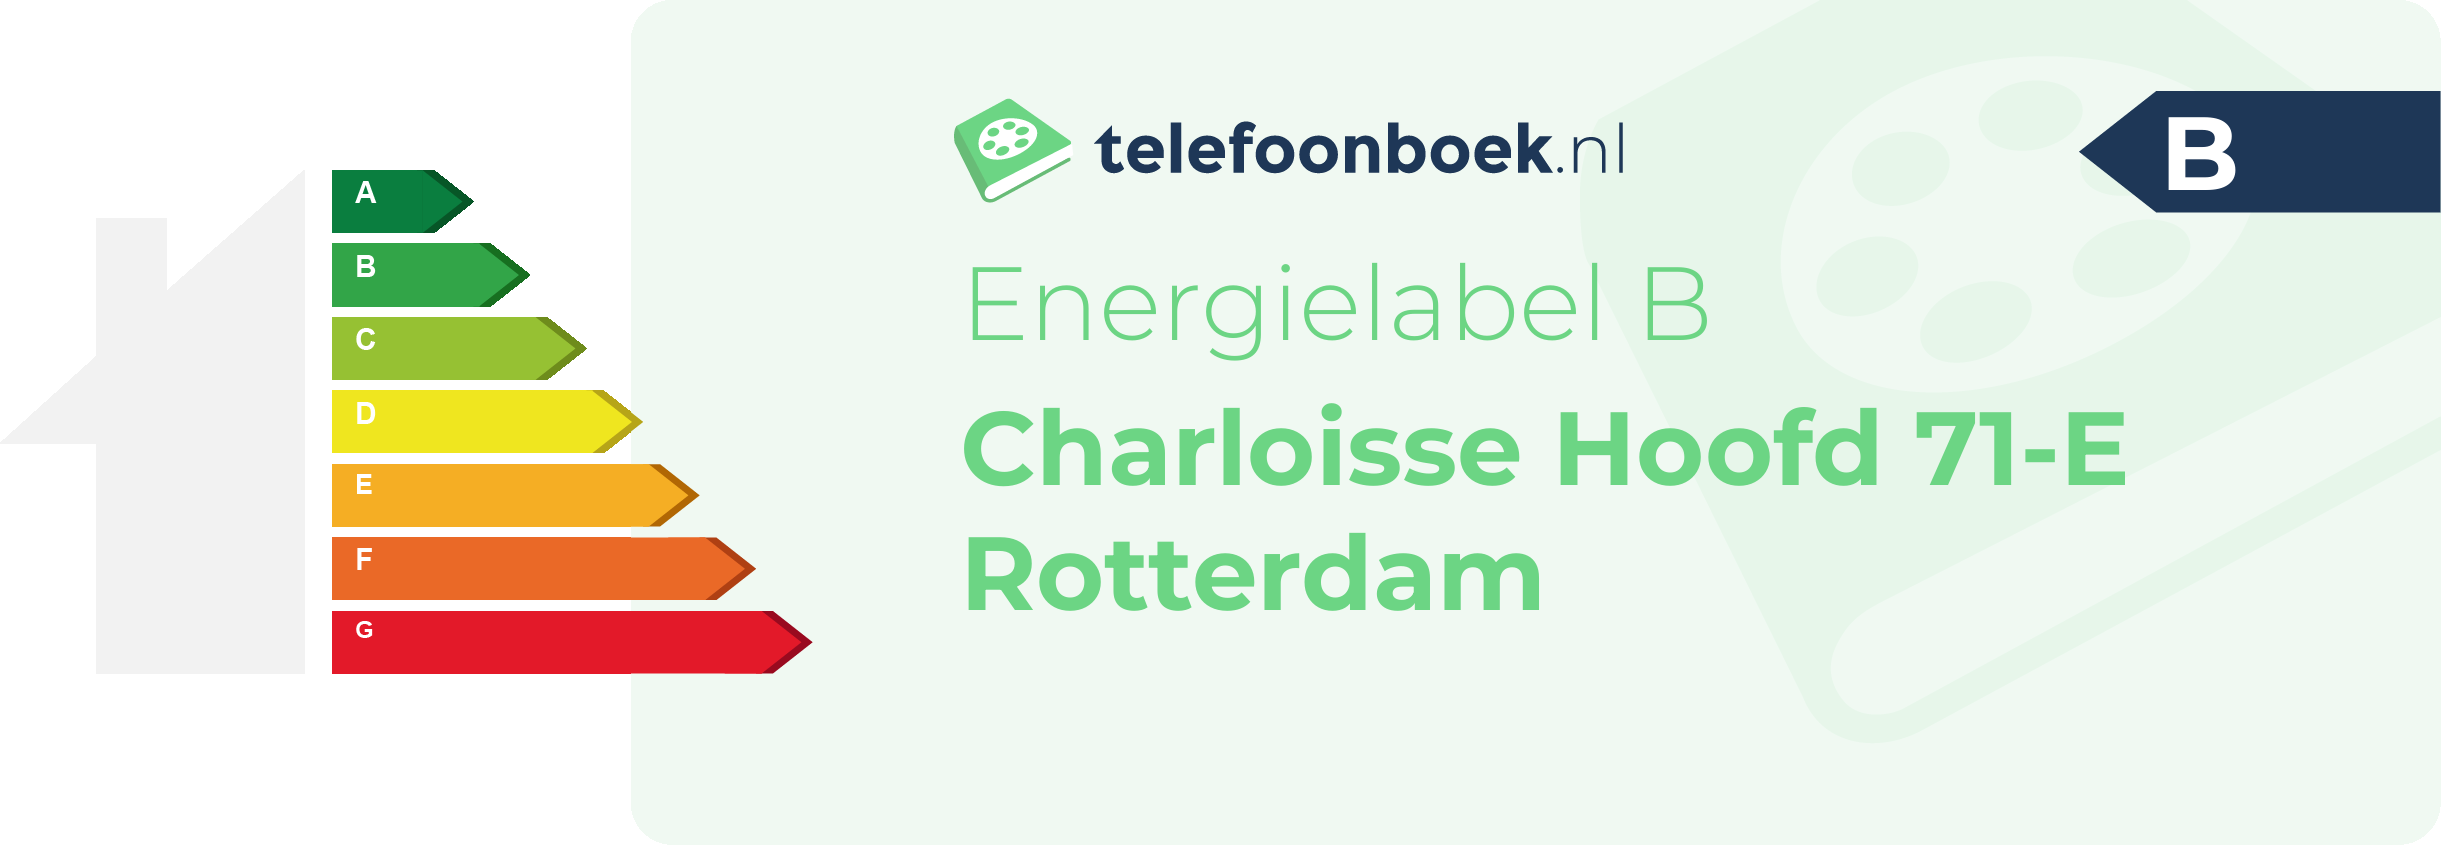 Energielabel Charloisse Hoofd 71-E Rotterdam